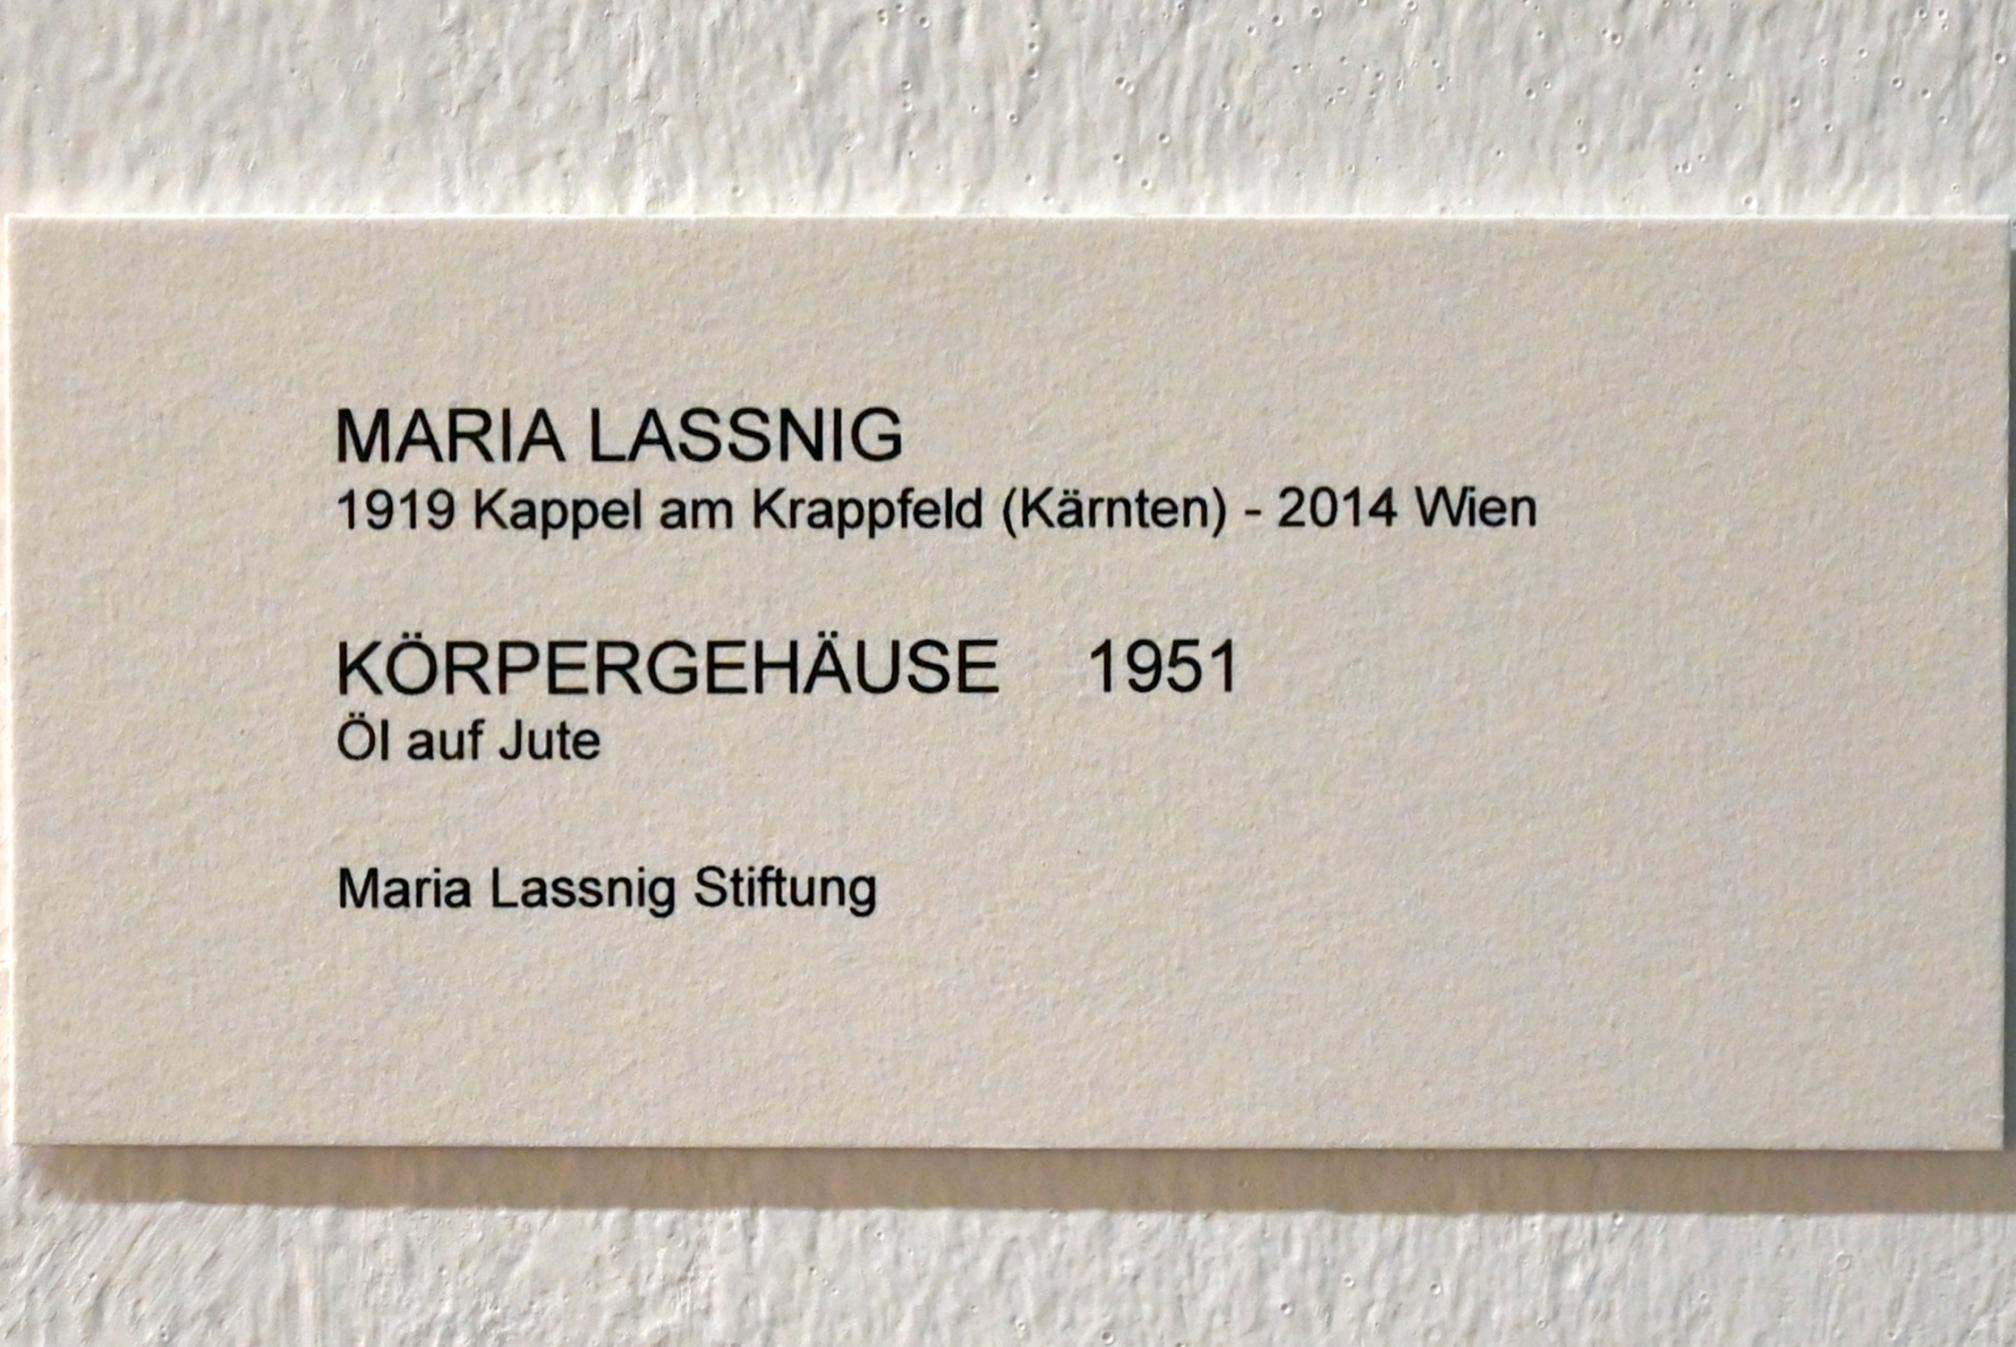 Maria Lassnig (1945–2011), Körpergehäuse, Bonn, Kunstmuseum, Ausstellung "Maria Lassnig - Wach bleiben" vom 10.02. - 08.05.2022, Saal 1, 1951, Bild 2/2